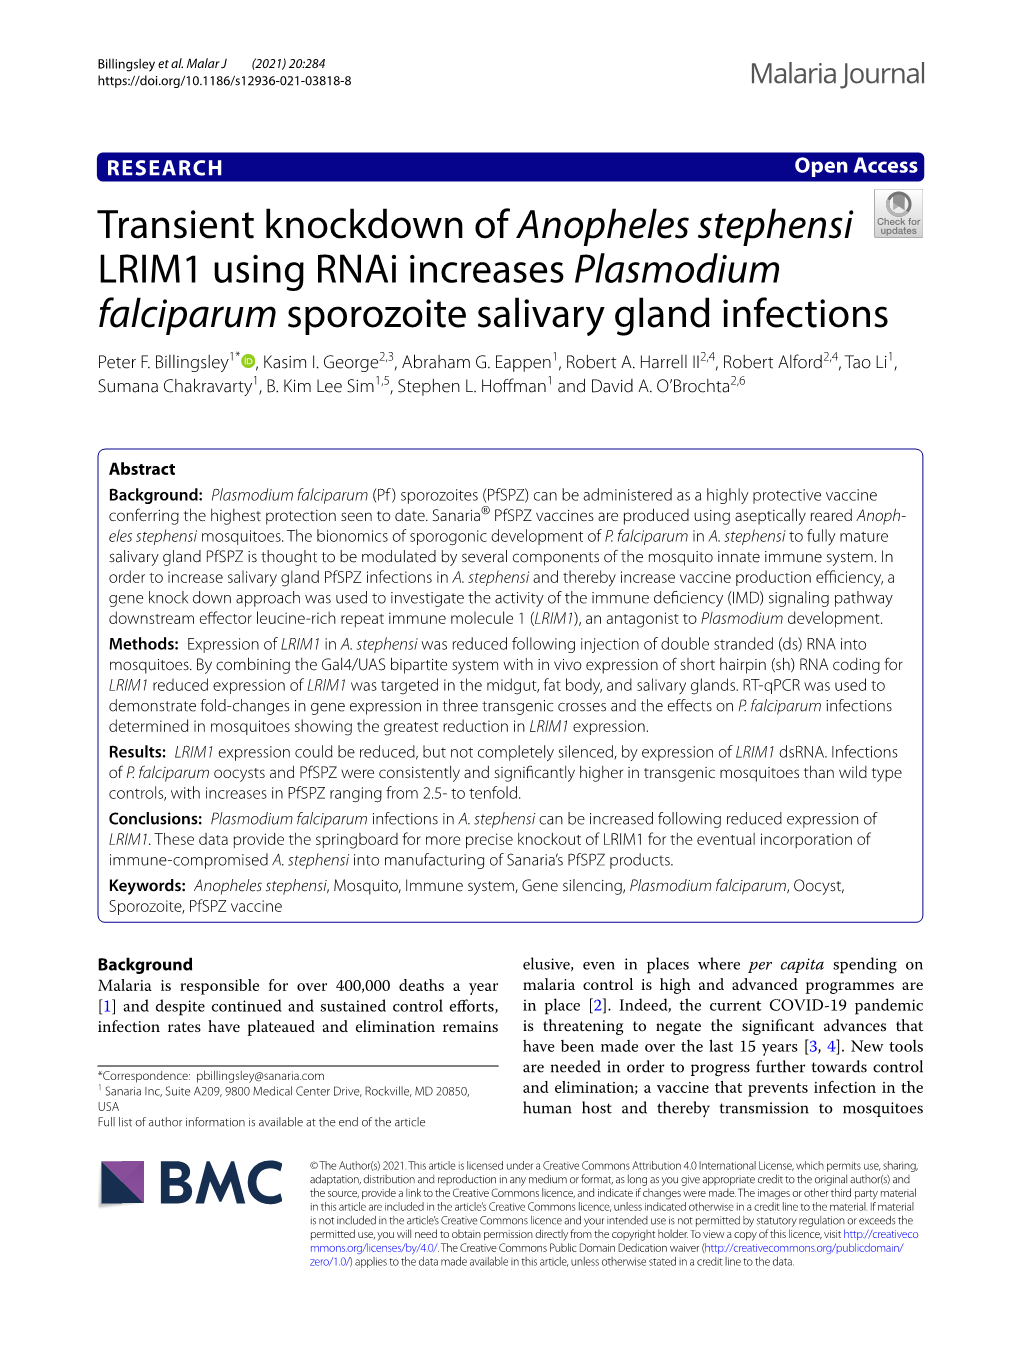 Anopheles Stephensi LRIM1 Using Rnai Increases Plasmodium Falciparum Sporozoite Salivary Gland Infections Peter F